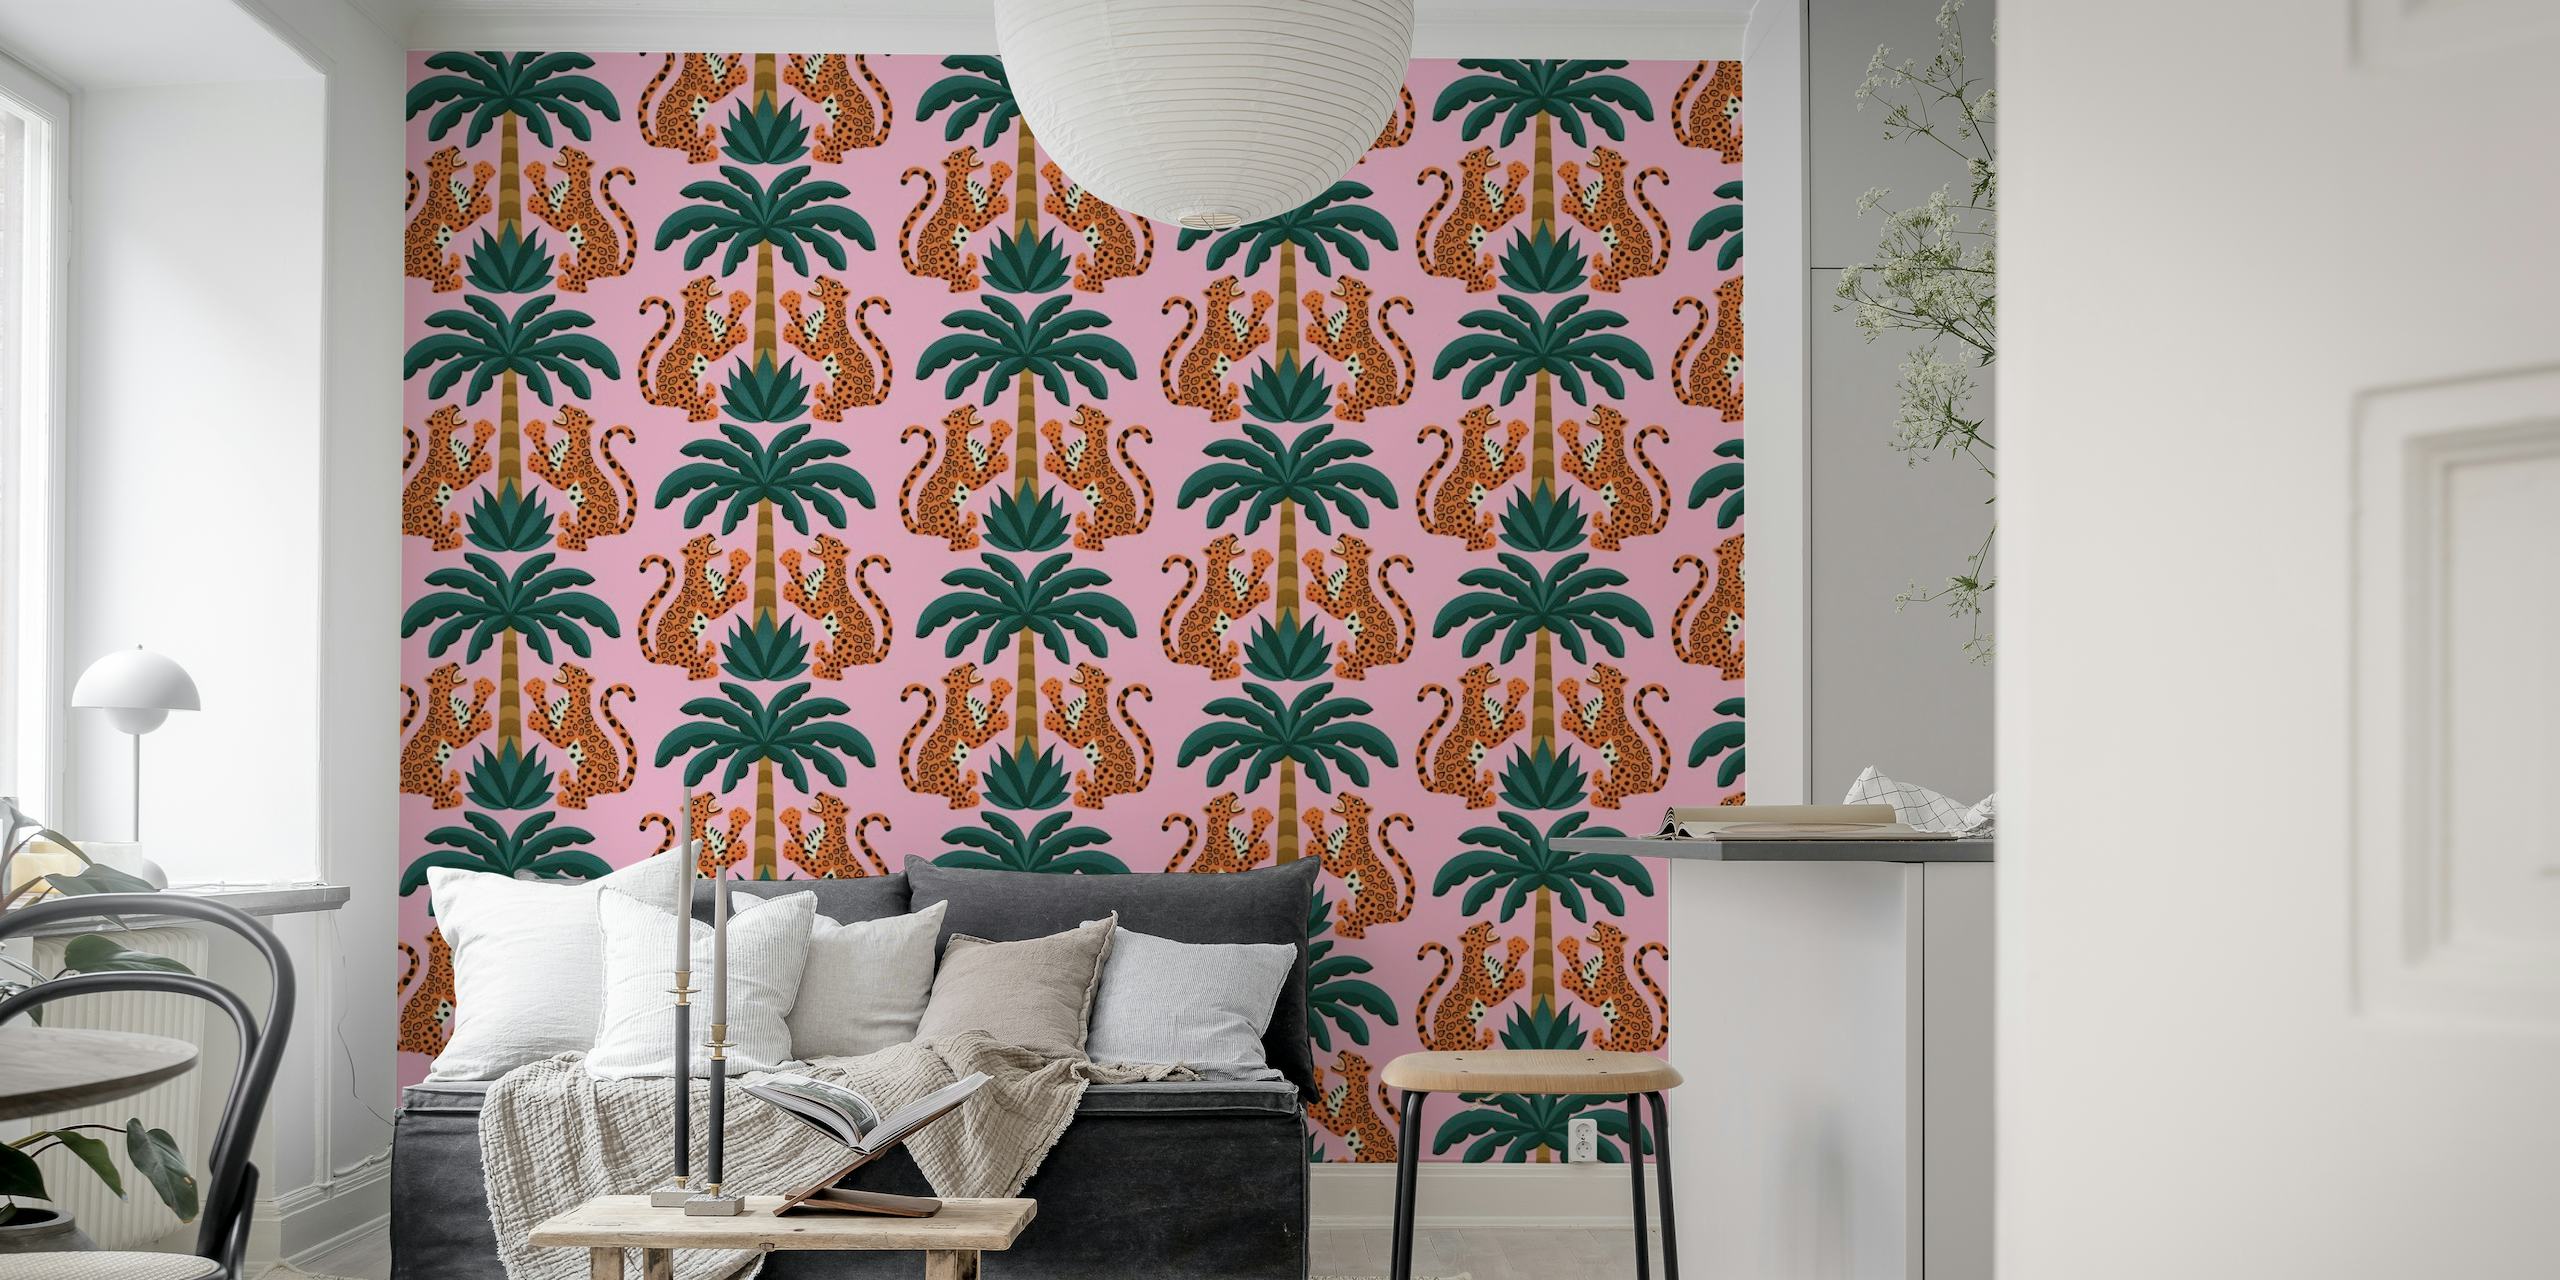 Jaguars and Palm wallpaper